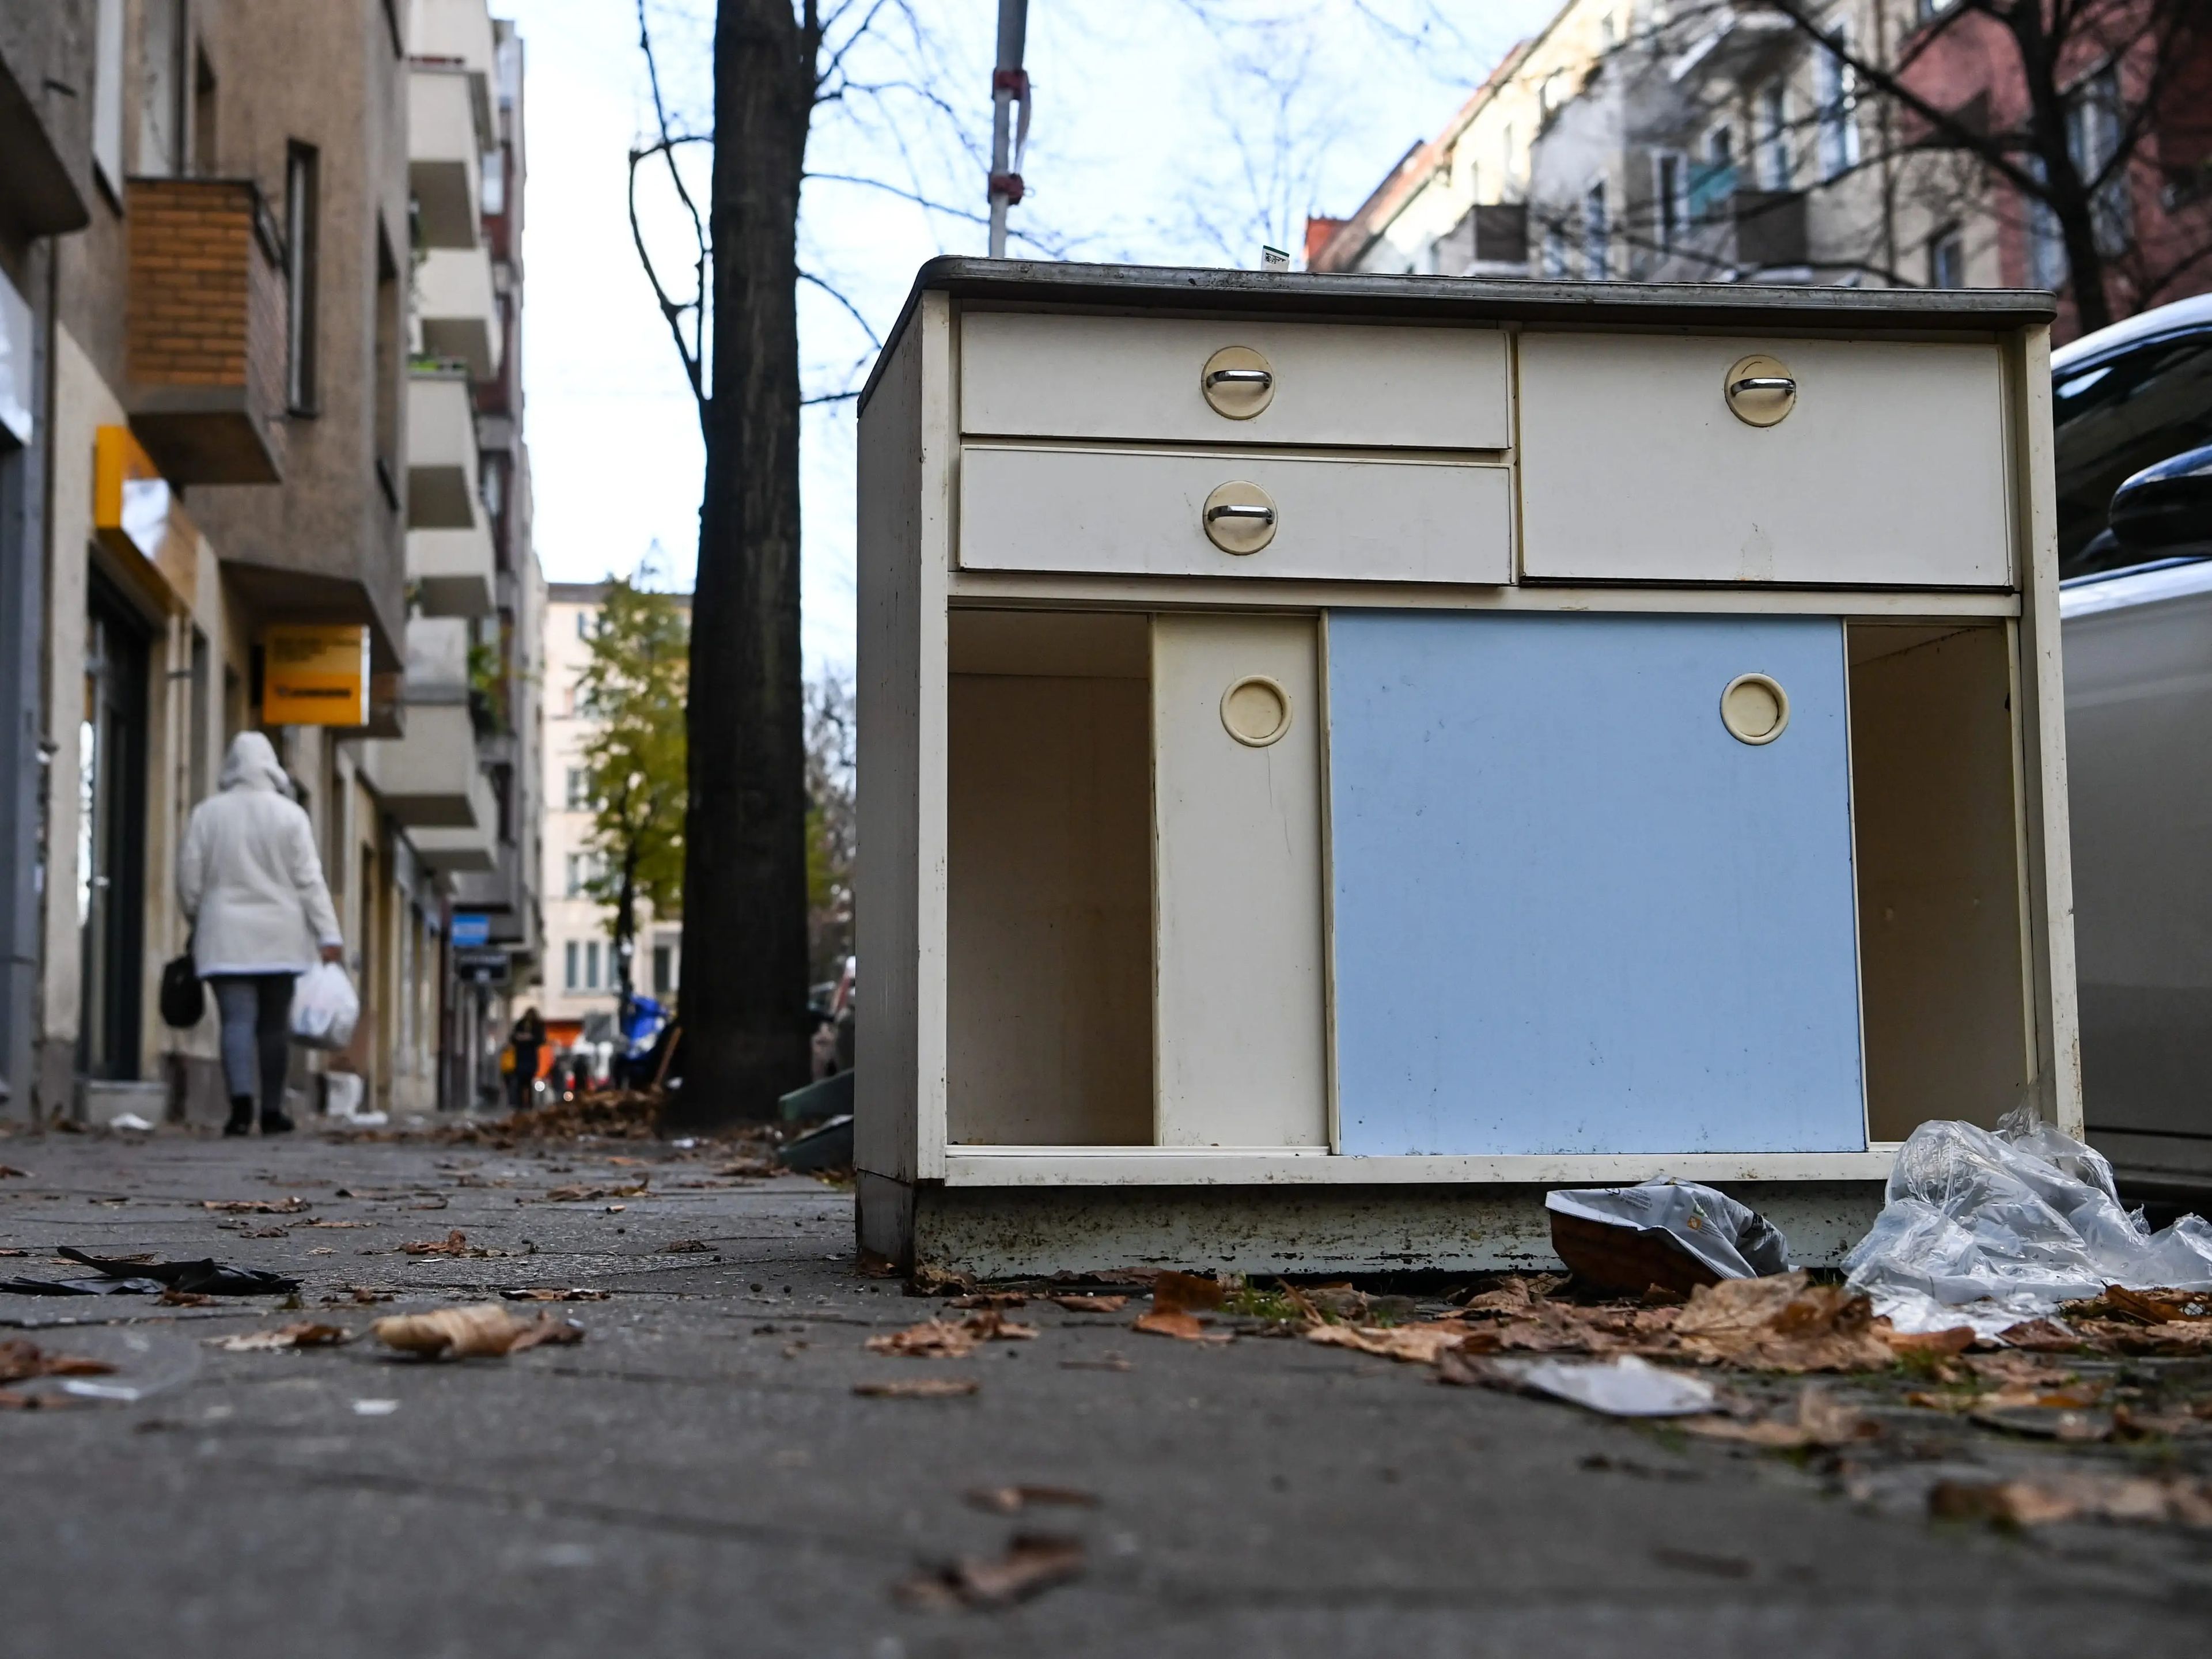 Unwanted furniture on a sidewalk in Berlin.